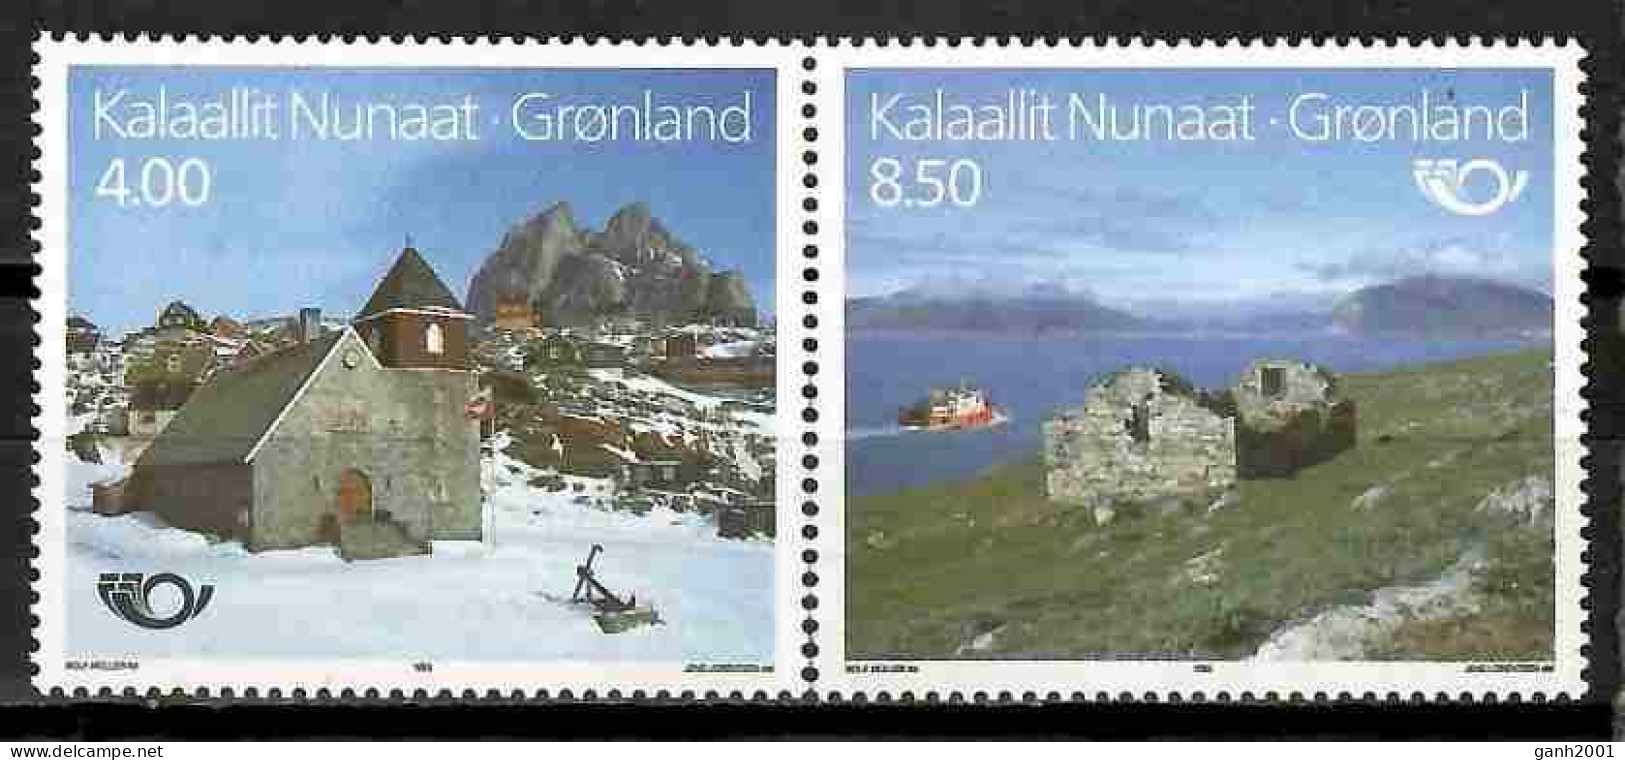 Greenland 1993 Groenlandia / Norden Landscapes Nature MNH Paisajes Naturaleza / Kn35  29-17 - Emissions Communes